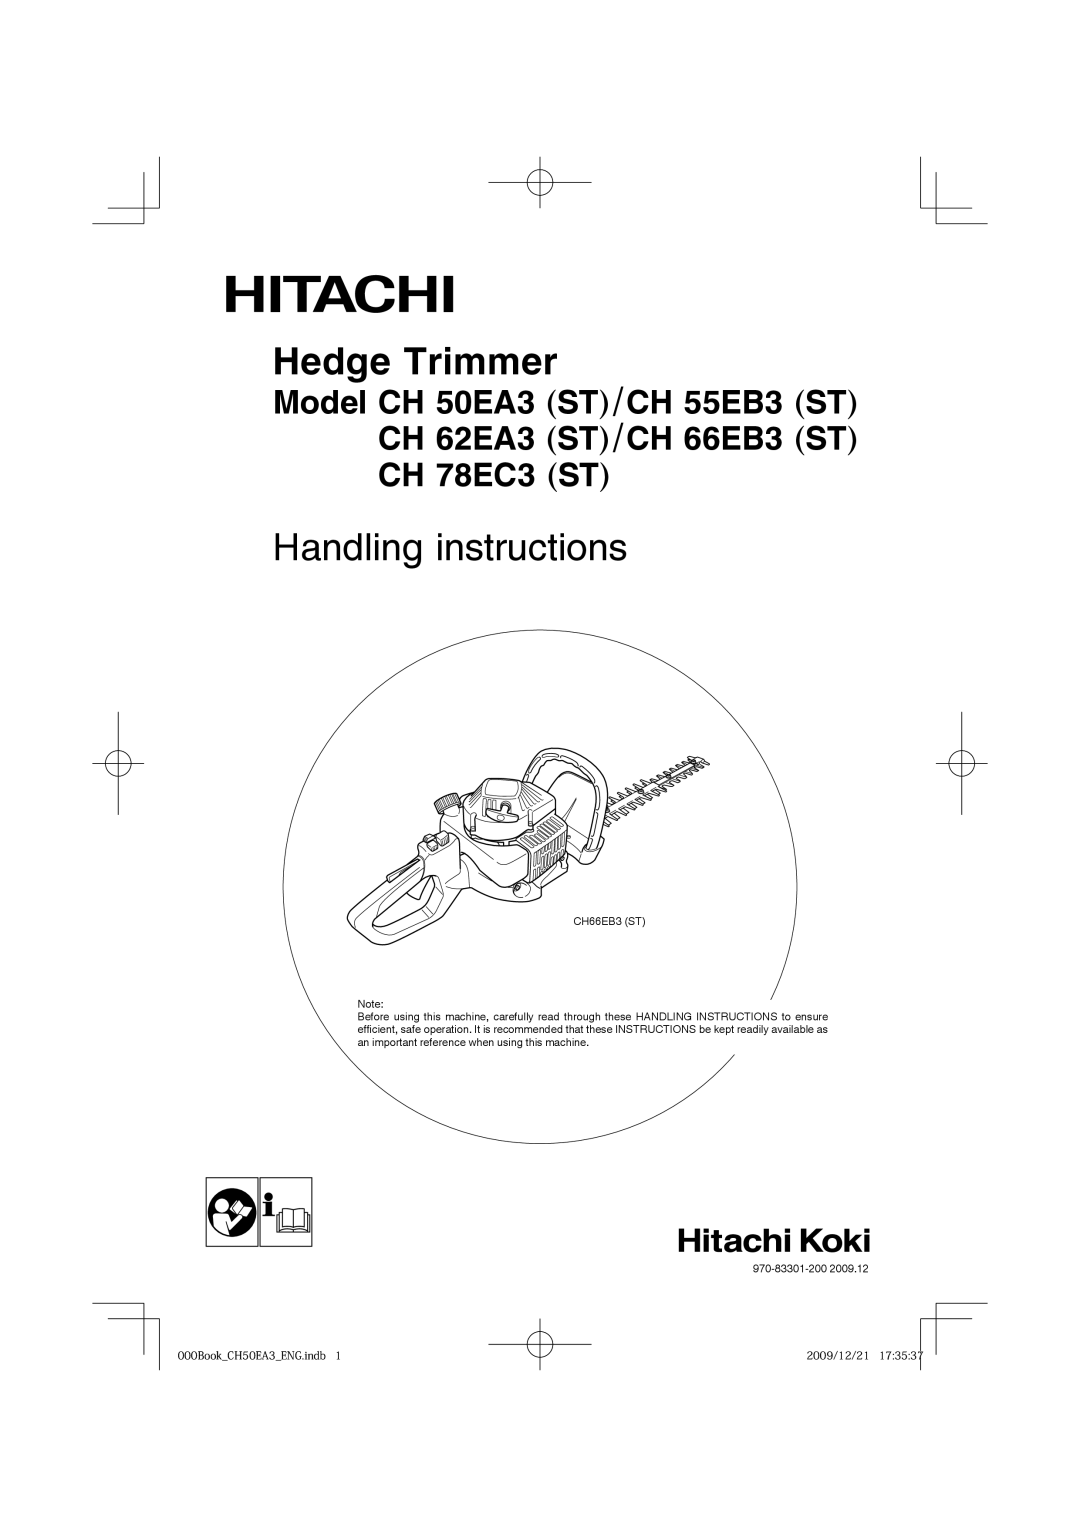 Hitachi CH 50EA3 (ST)/CH 55EB3 (ST), CH 78EC3 (ST), CH 62EA3 (ST)/CH 66EB3 (ST) manual Hedge Trimmer, Handling instructions 